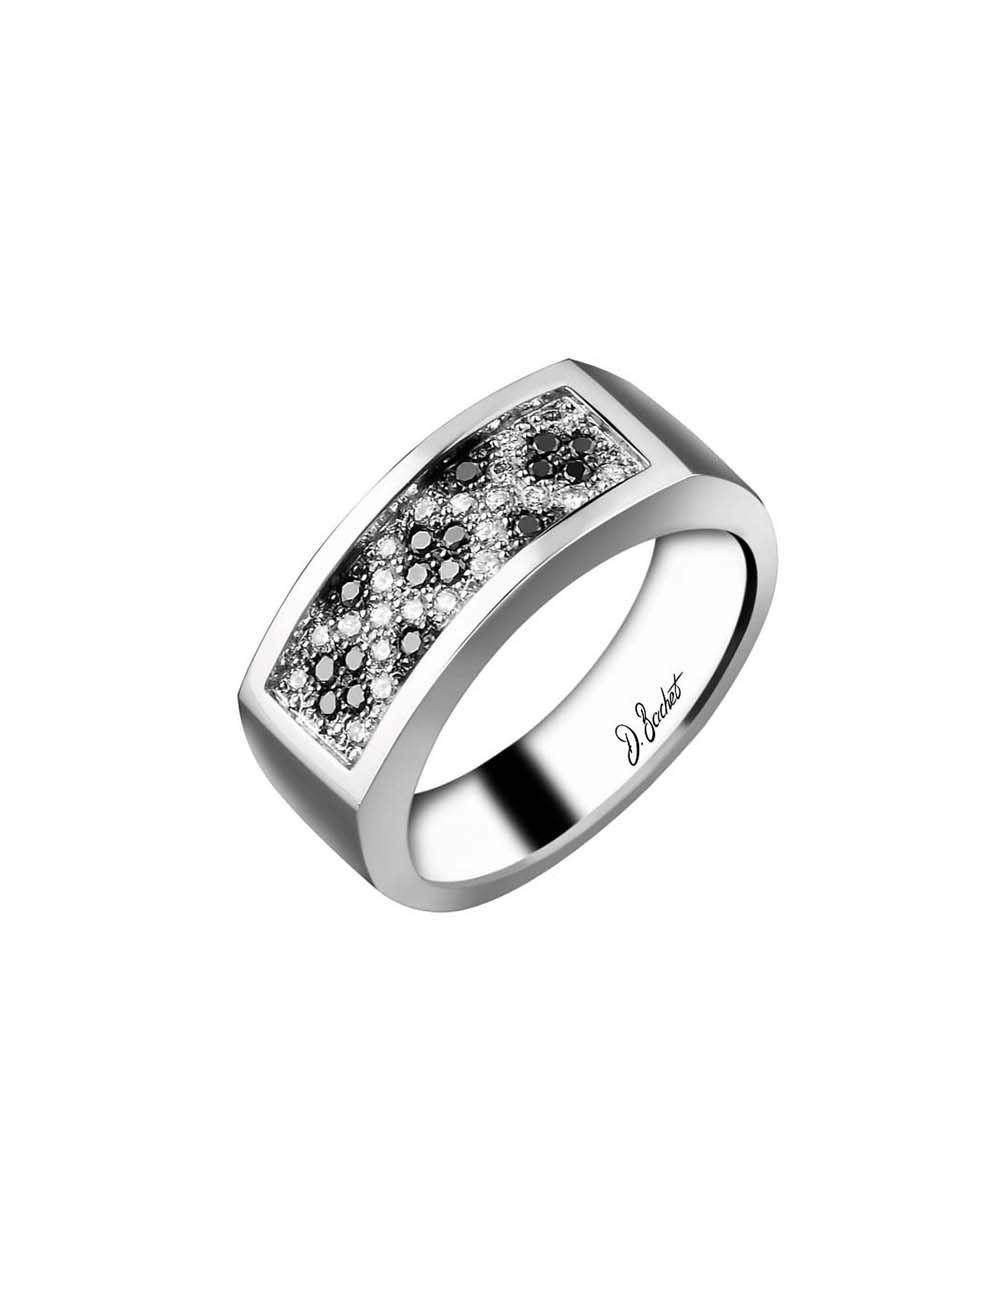 Art Deco 'Epicurien' signet ring with 38 diamonds, a men's jewel blending joy of living with modern elegance.